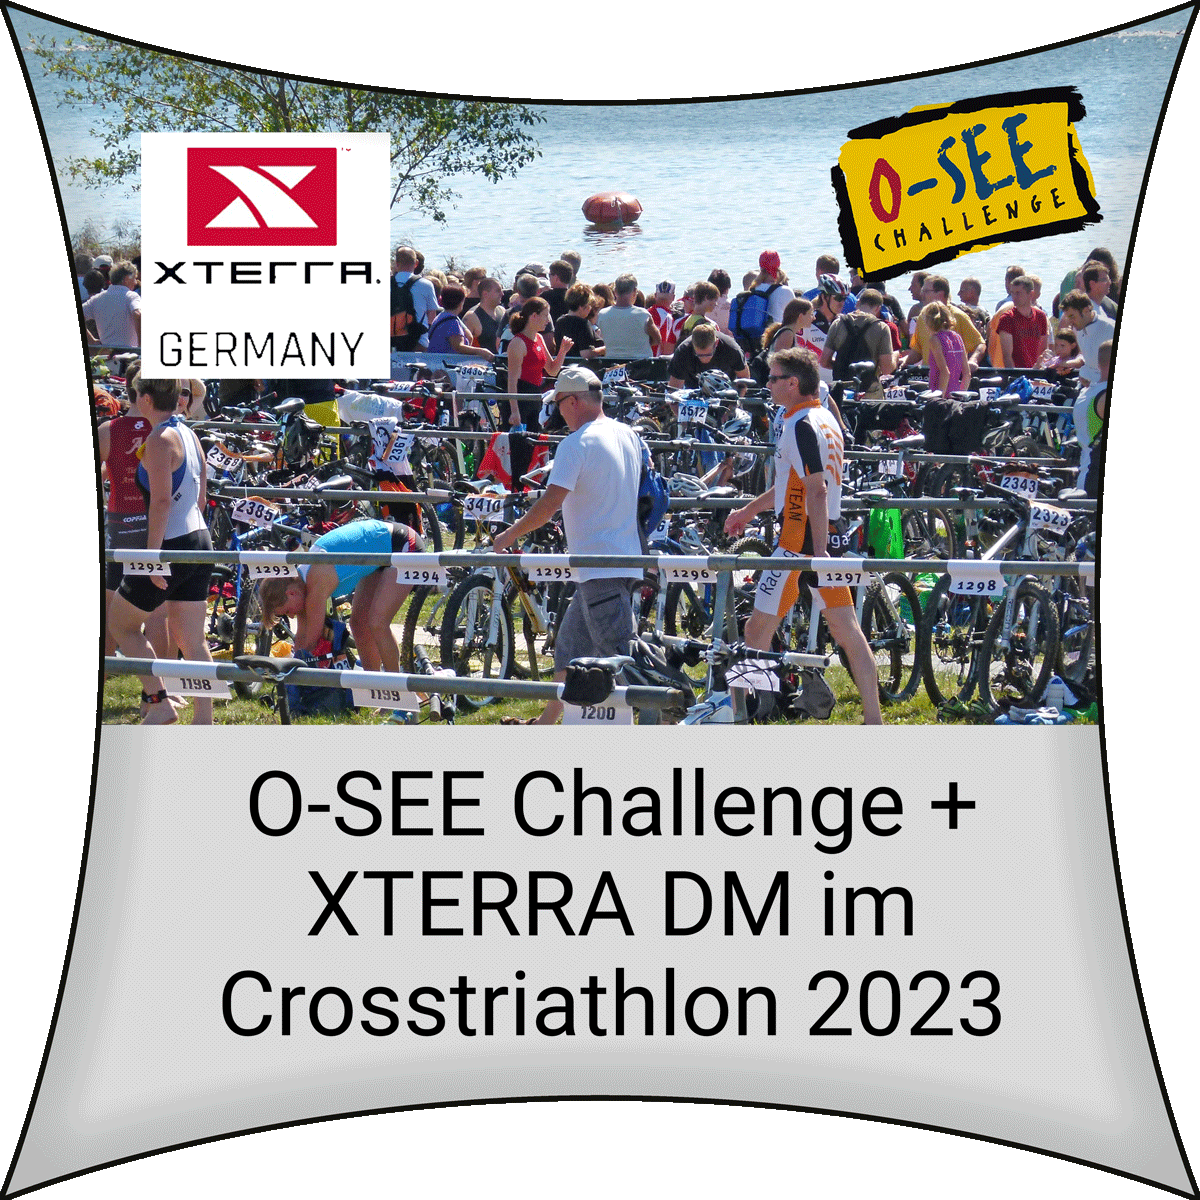 O-SEE Challenge + XTERRA DM im Crosstriathlon 2023